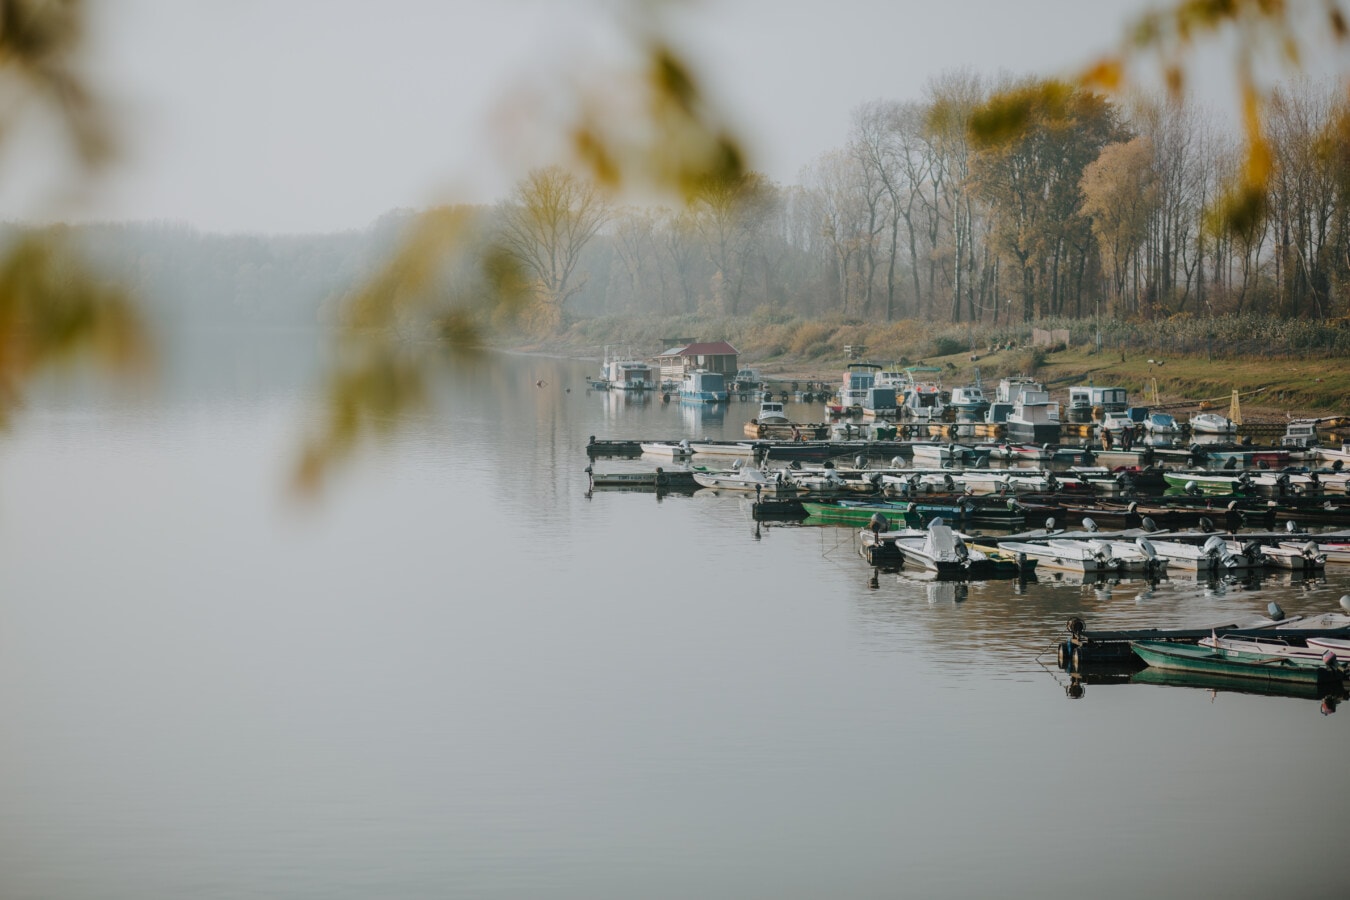 foggy, lakeside, autumn season, harbor, boats, vehicles, river boat, waterfront, water level, calm